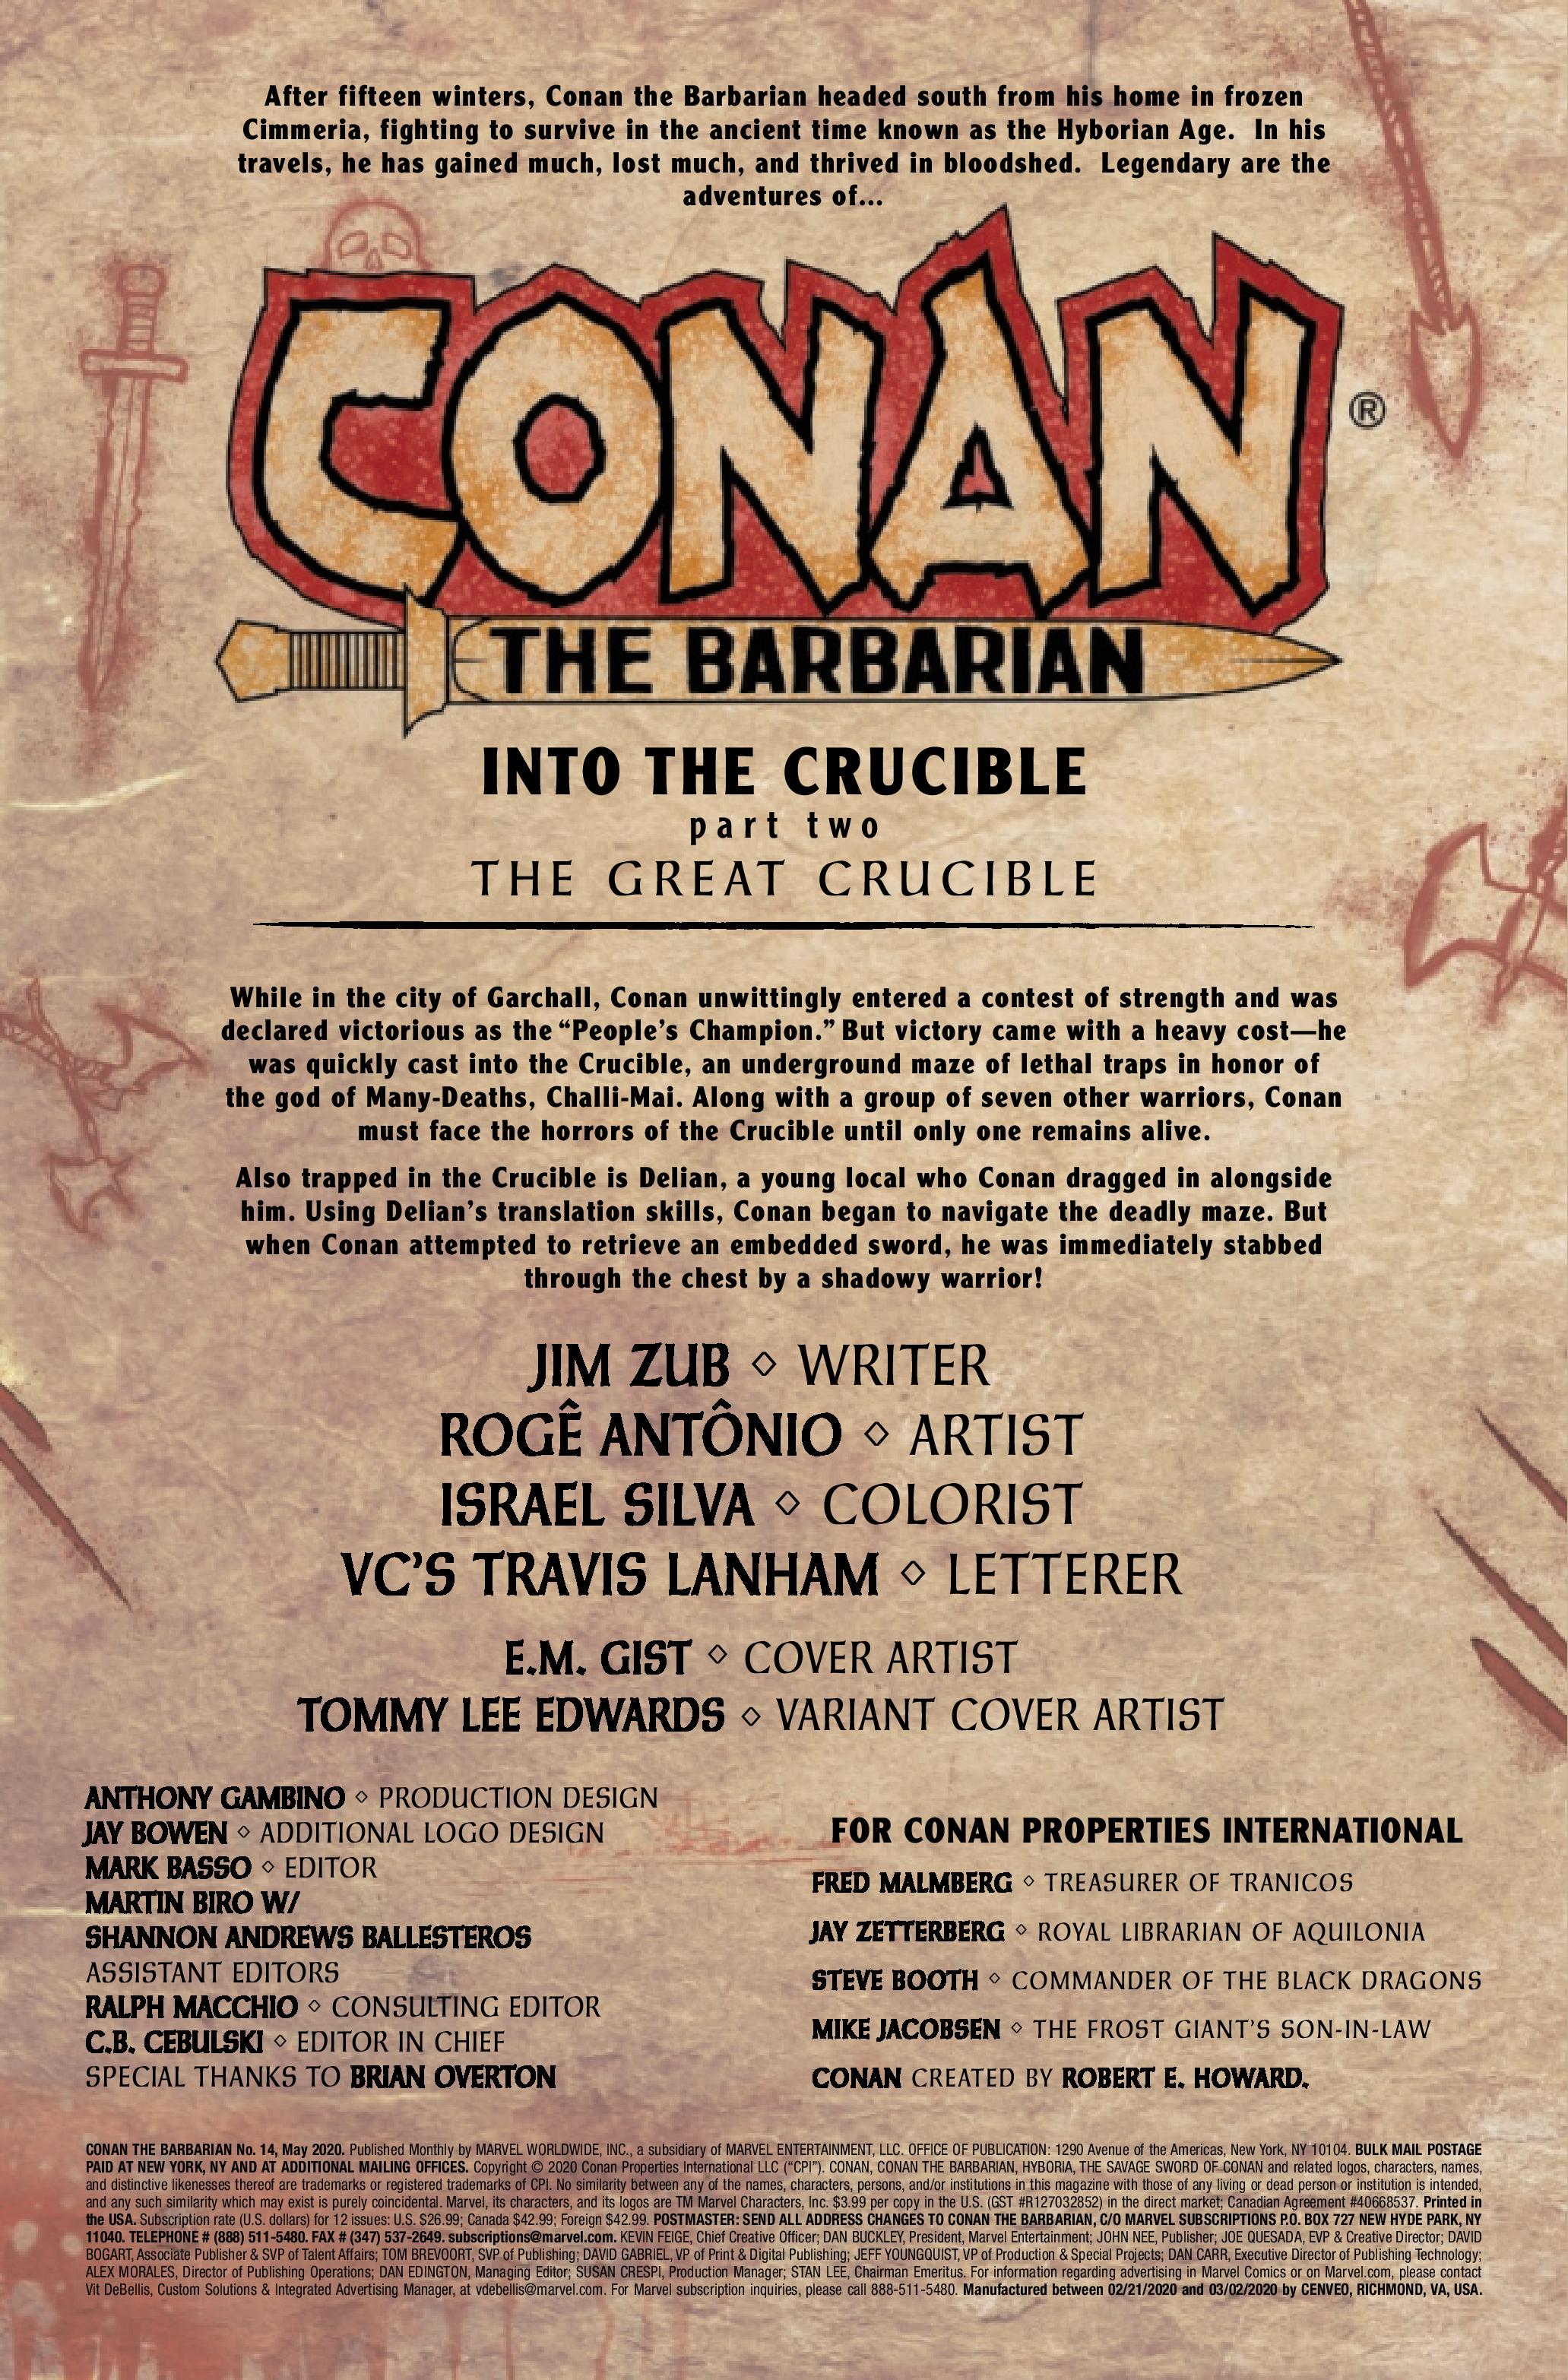 Conan the Barbarian #14 Edwards Variant (2018)